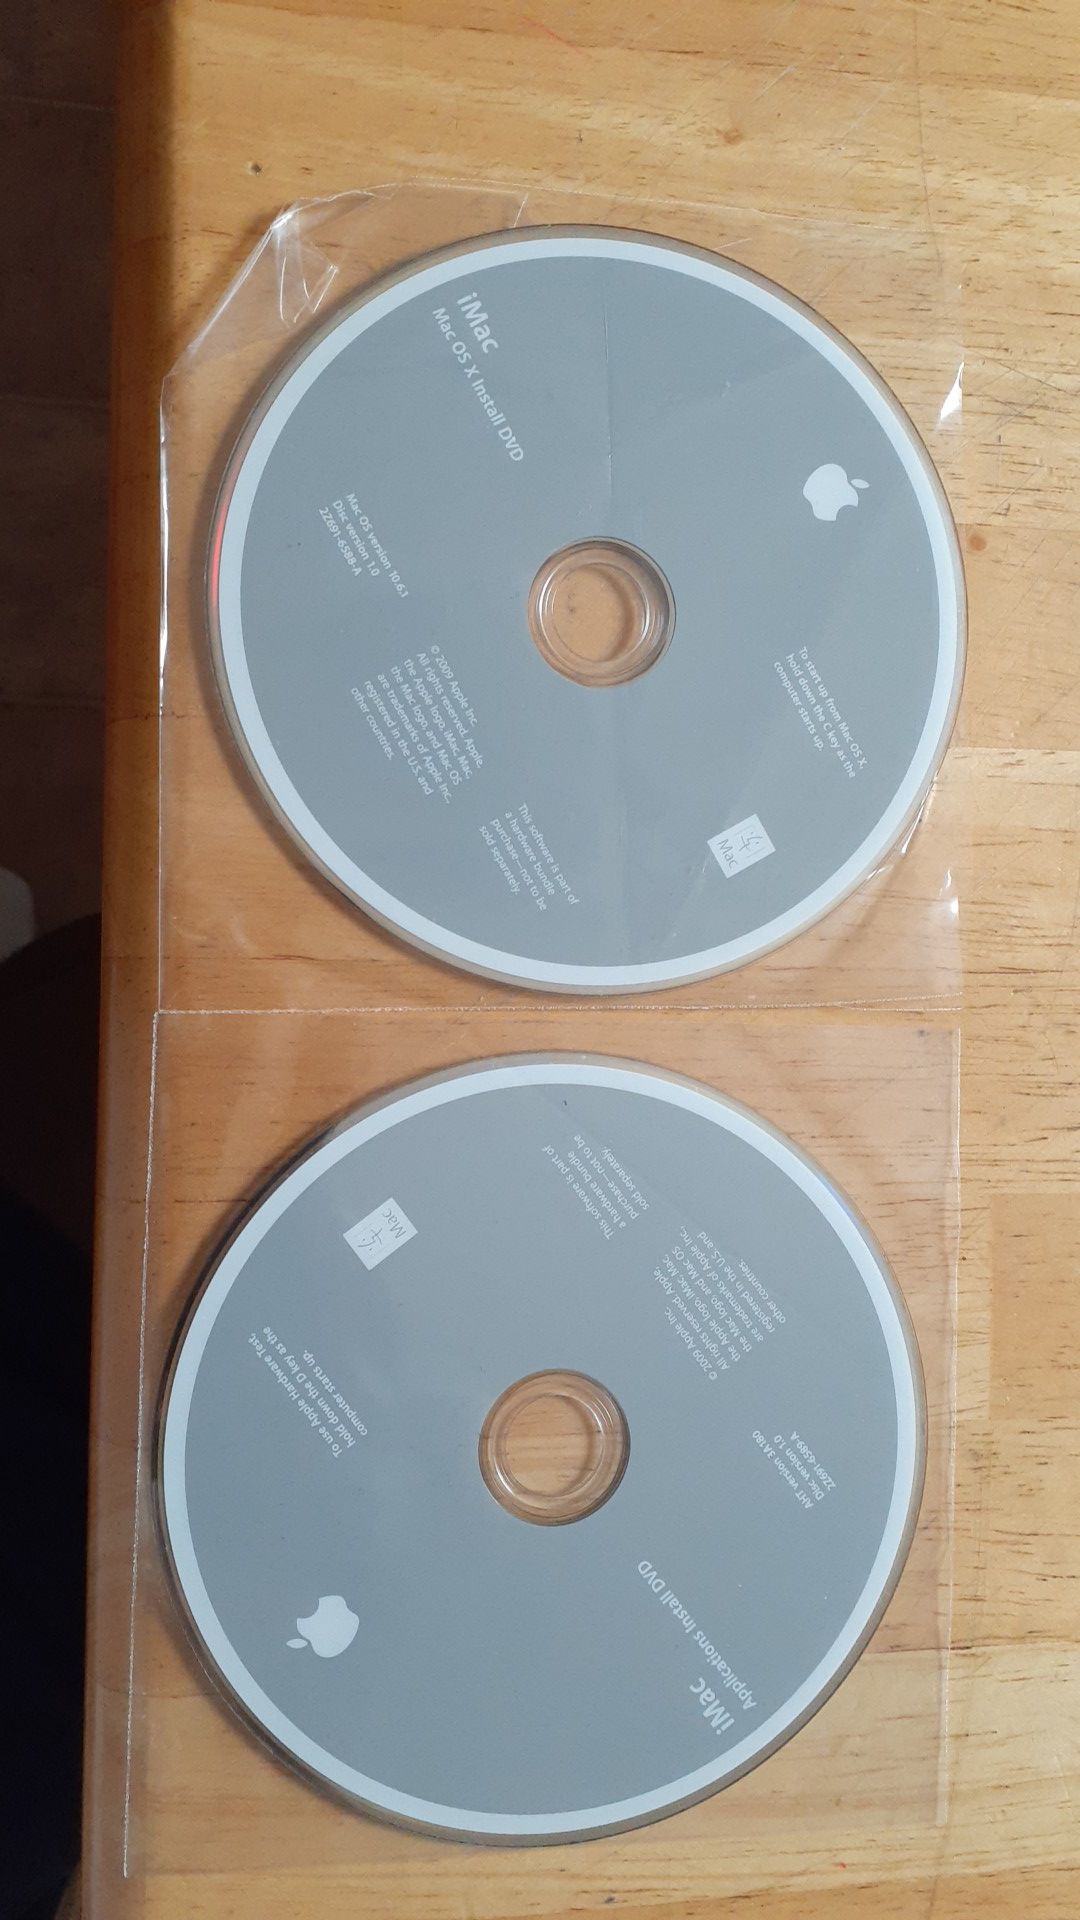 Mac OS version 10.6.1 install discs